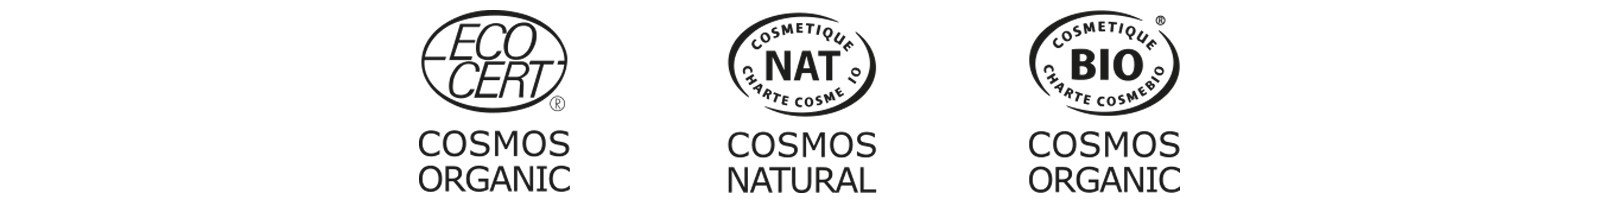 cosmos natural organic logos